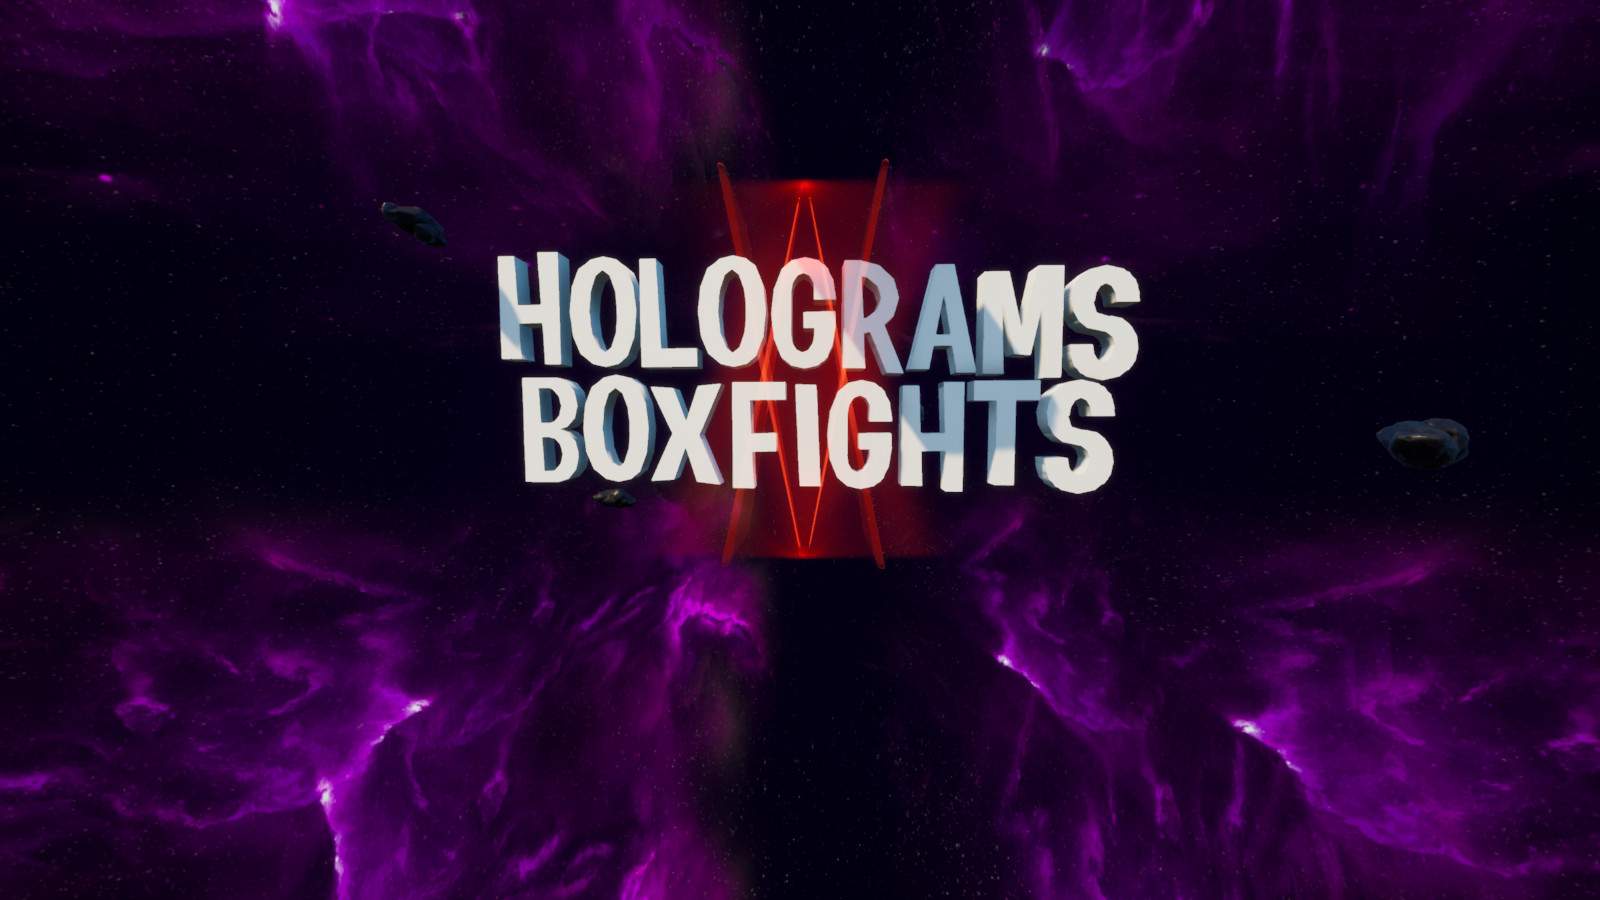 HOLOGRAMS BOXFIGHT!